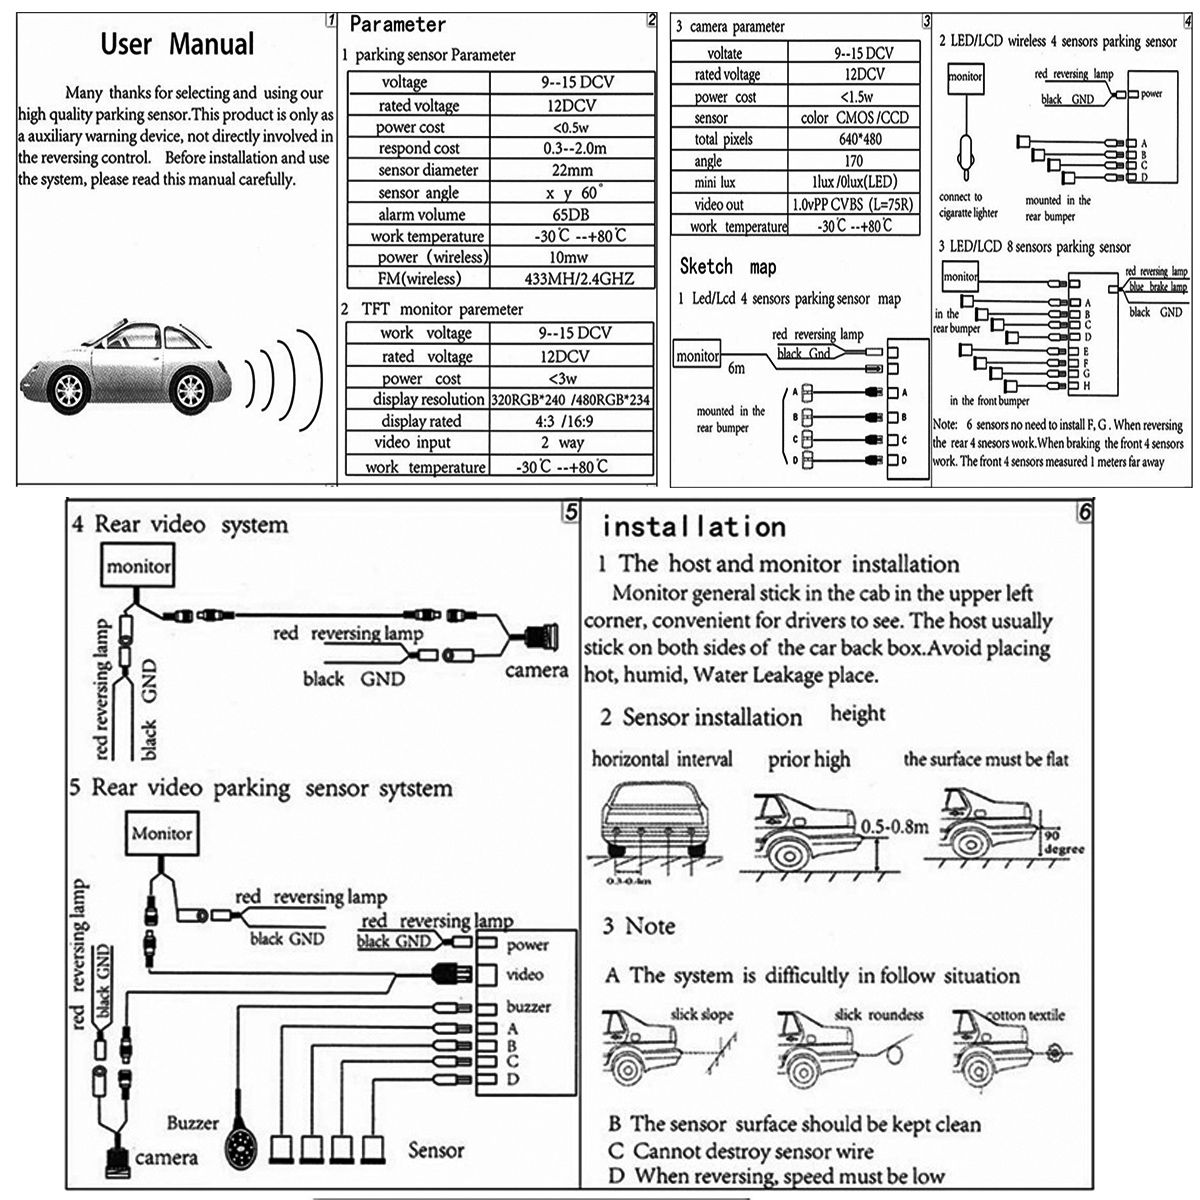 Car-Parking-Sensor-Kit-Reversing-4-Sensor-Audio-Buzzer-Alarm-Backup-Sound-Alert-1767433